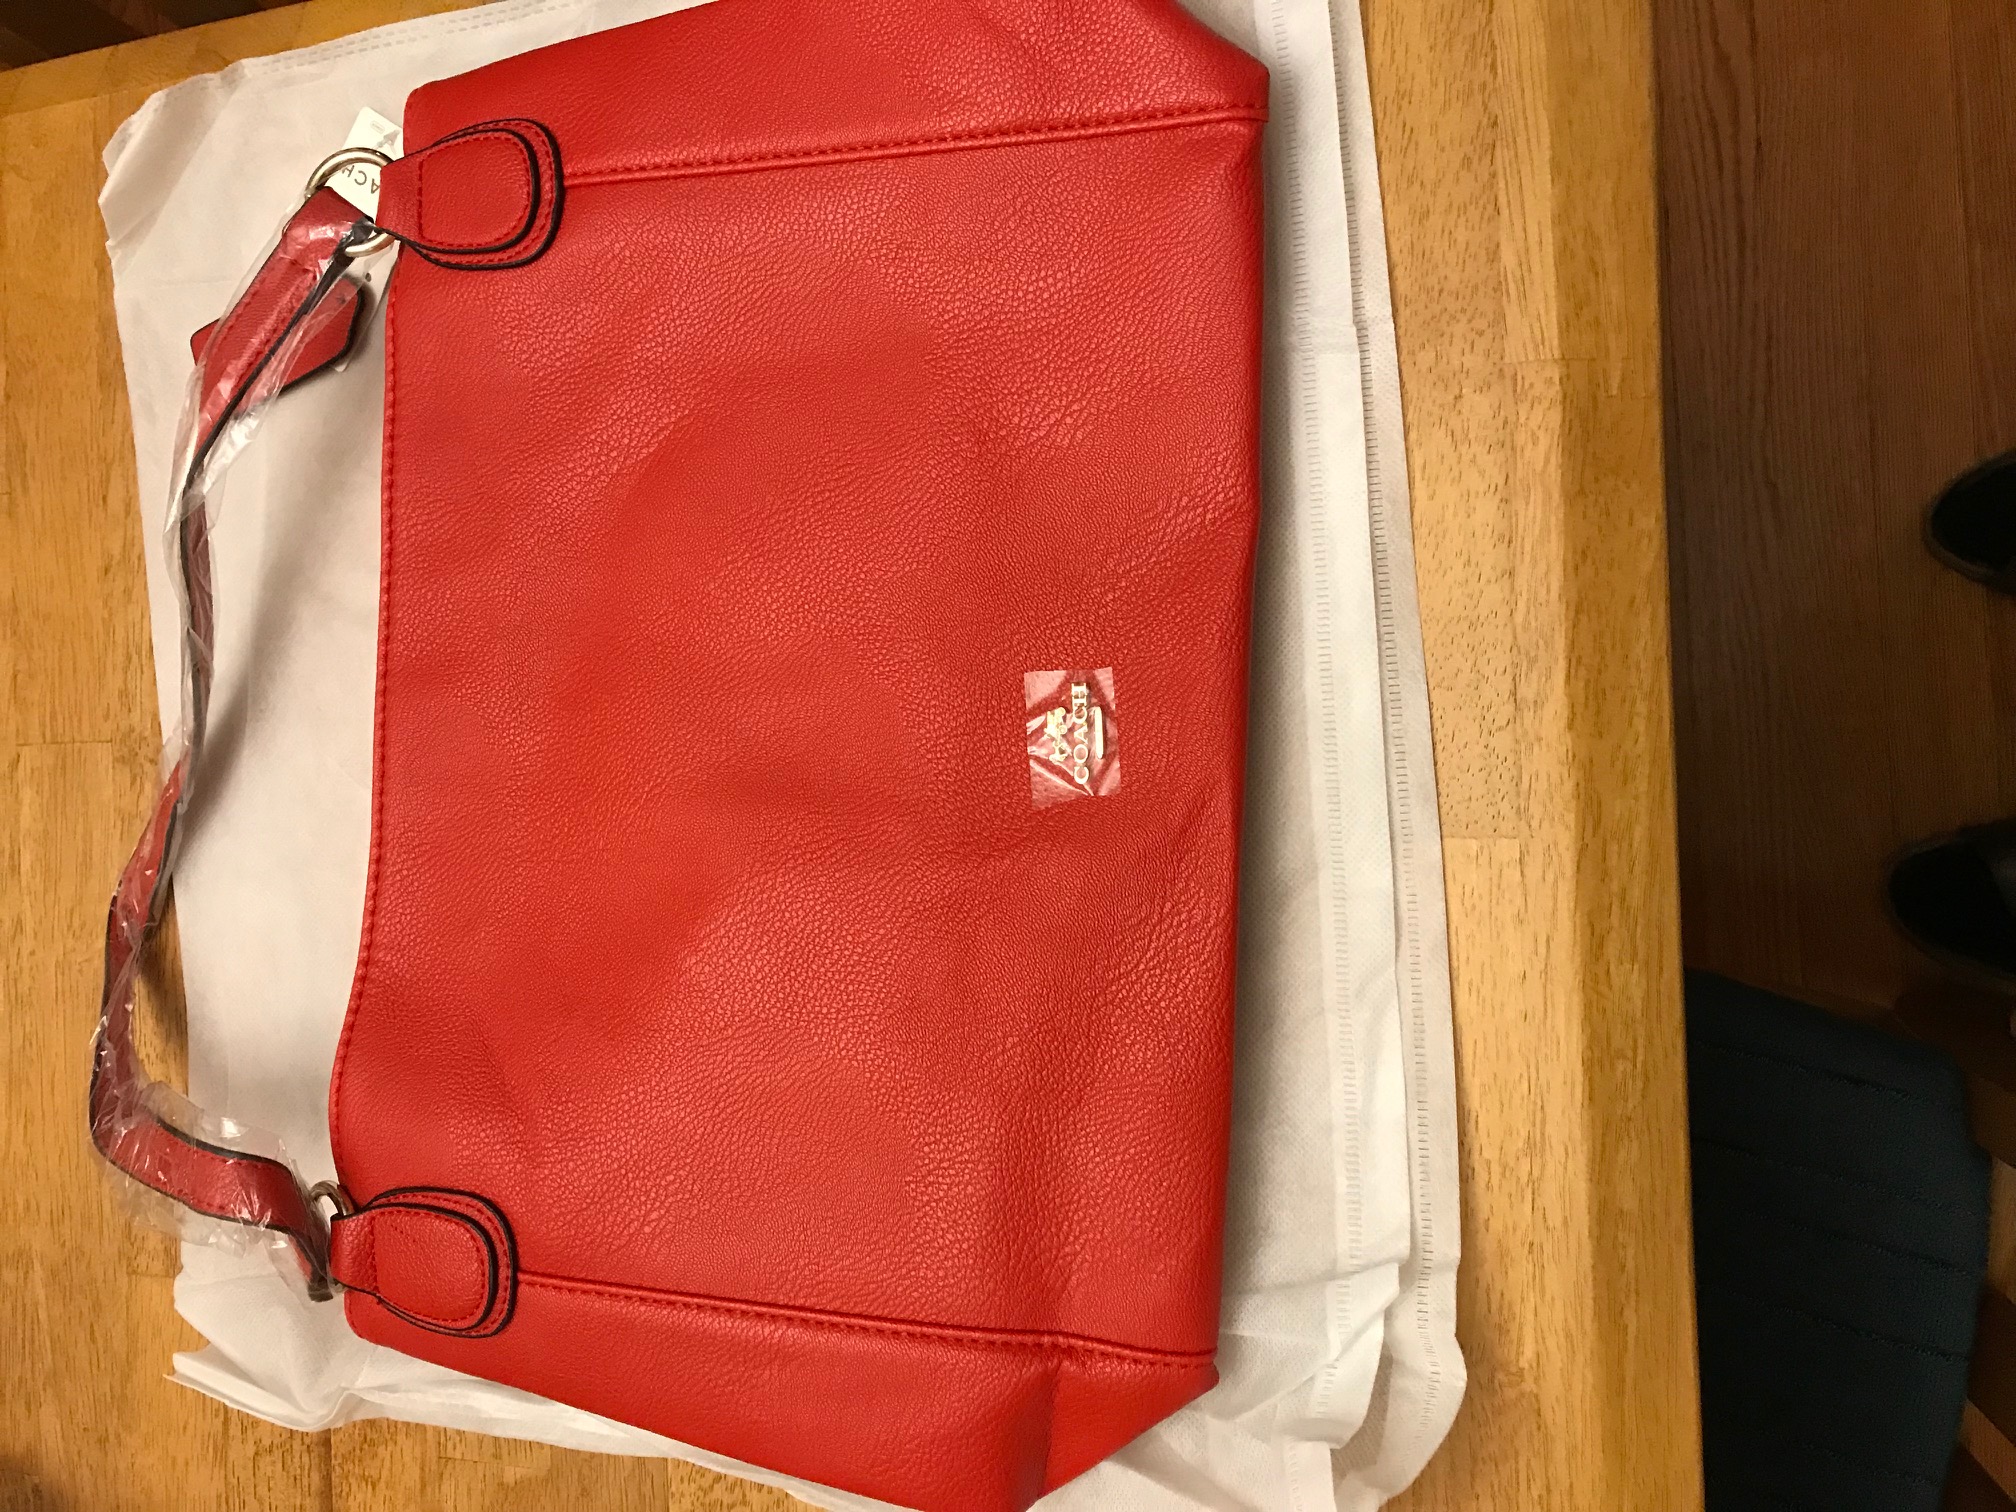 1-st counterfeit Coach handbag